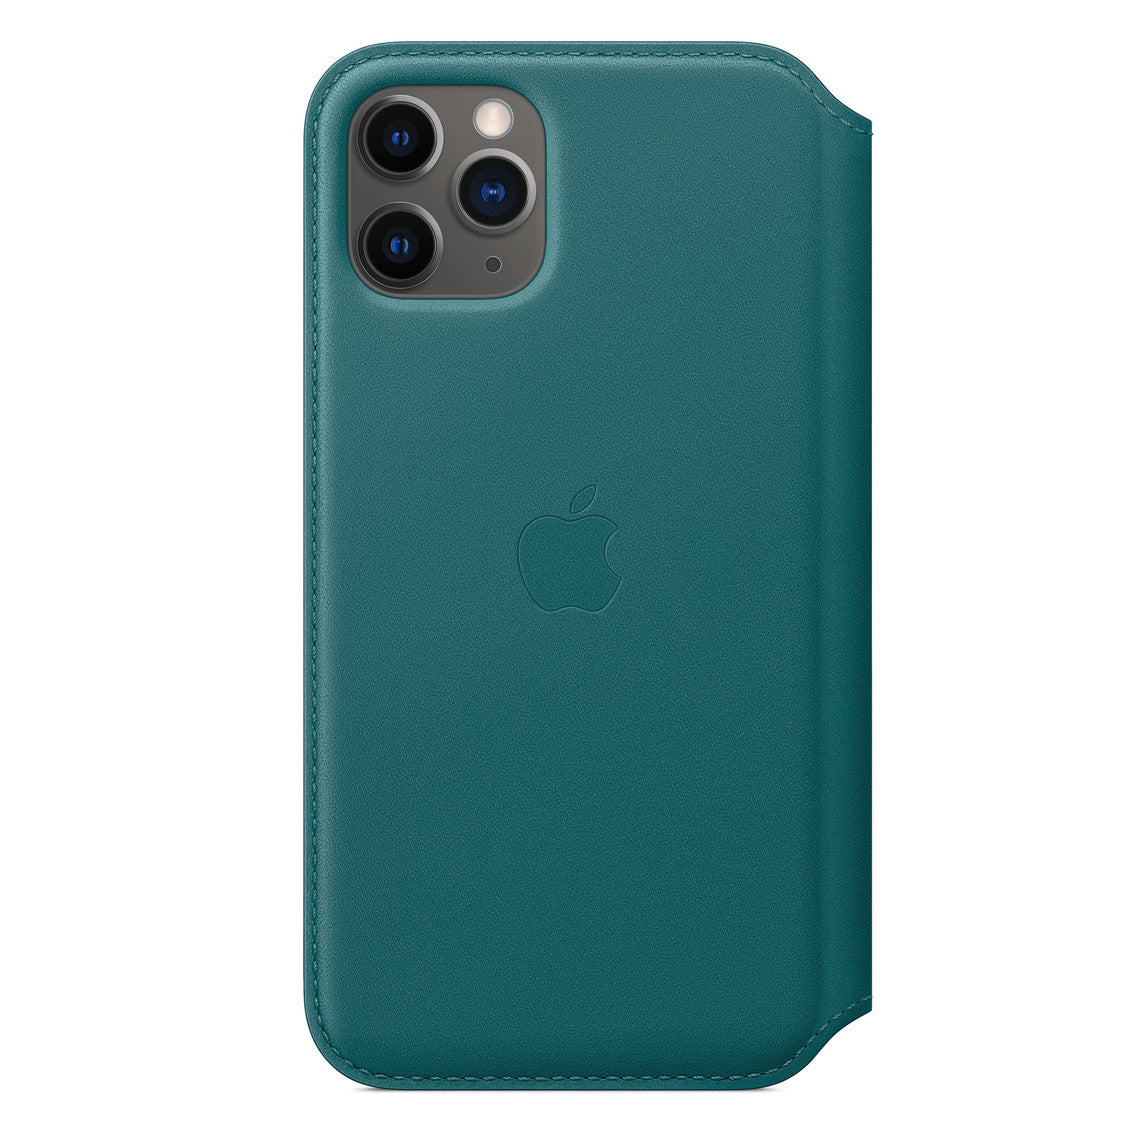 Genuine Apple Leather Folio Case for iPhone 11 Pro - Peacock